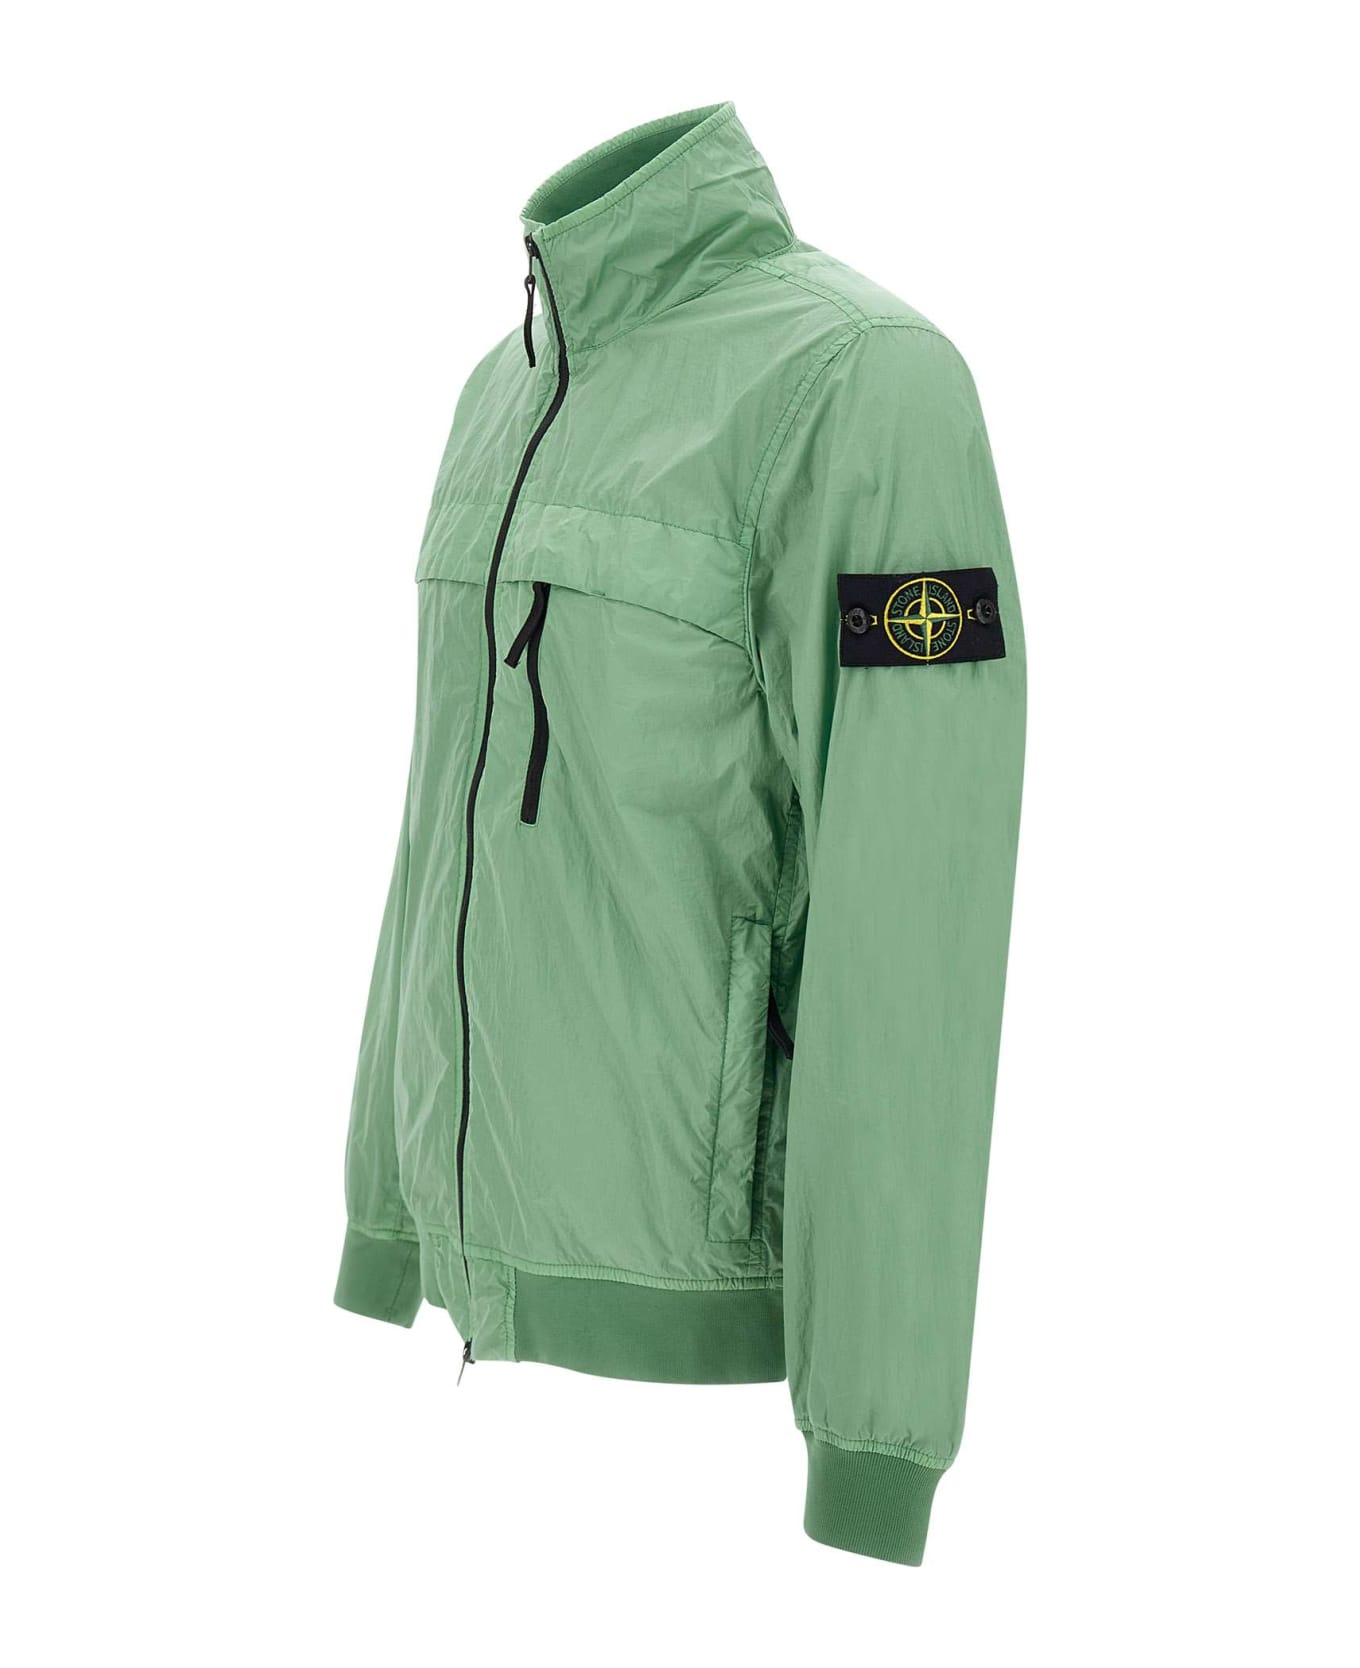 Stone Island Garment Dyed Crinkle Reps Ny Jacket - GREEN ブレザー